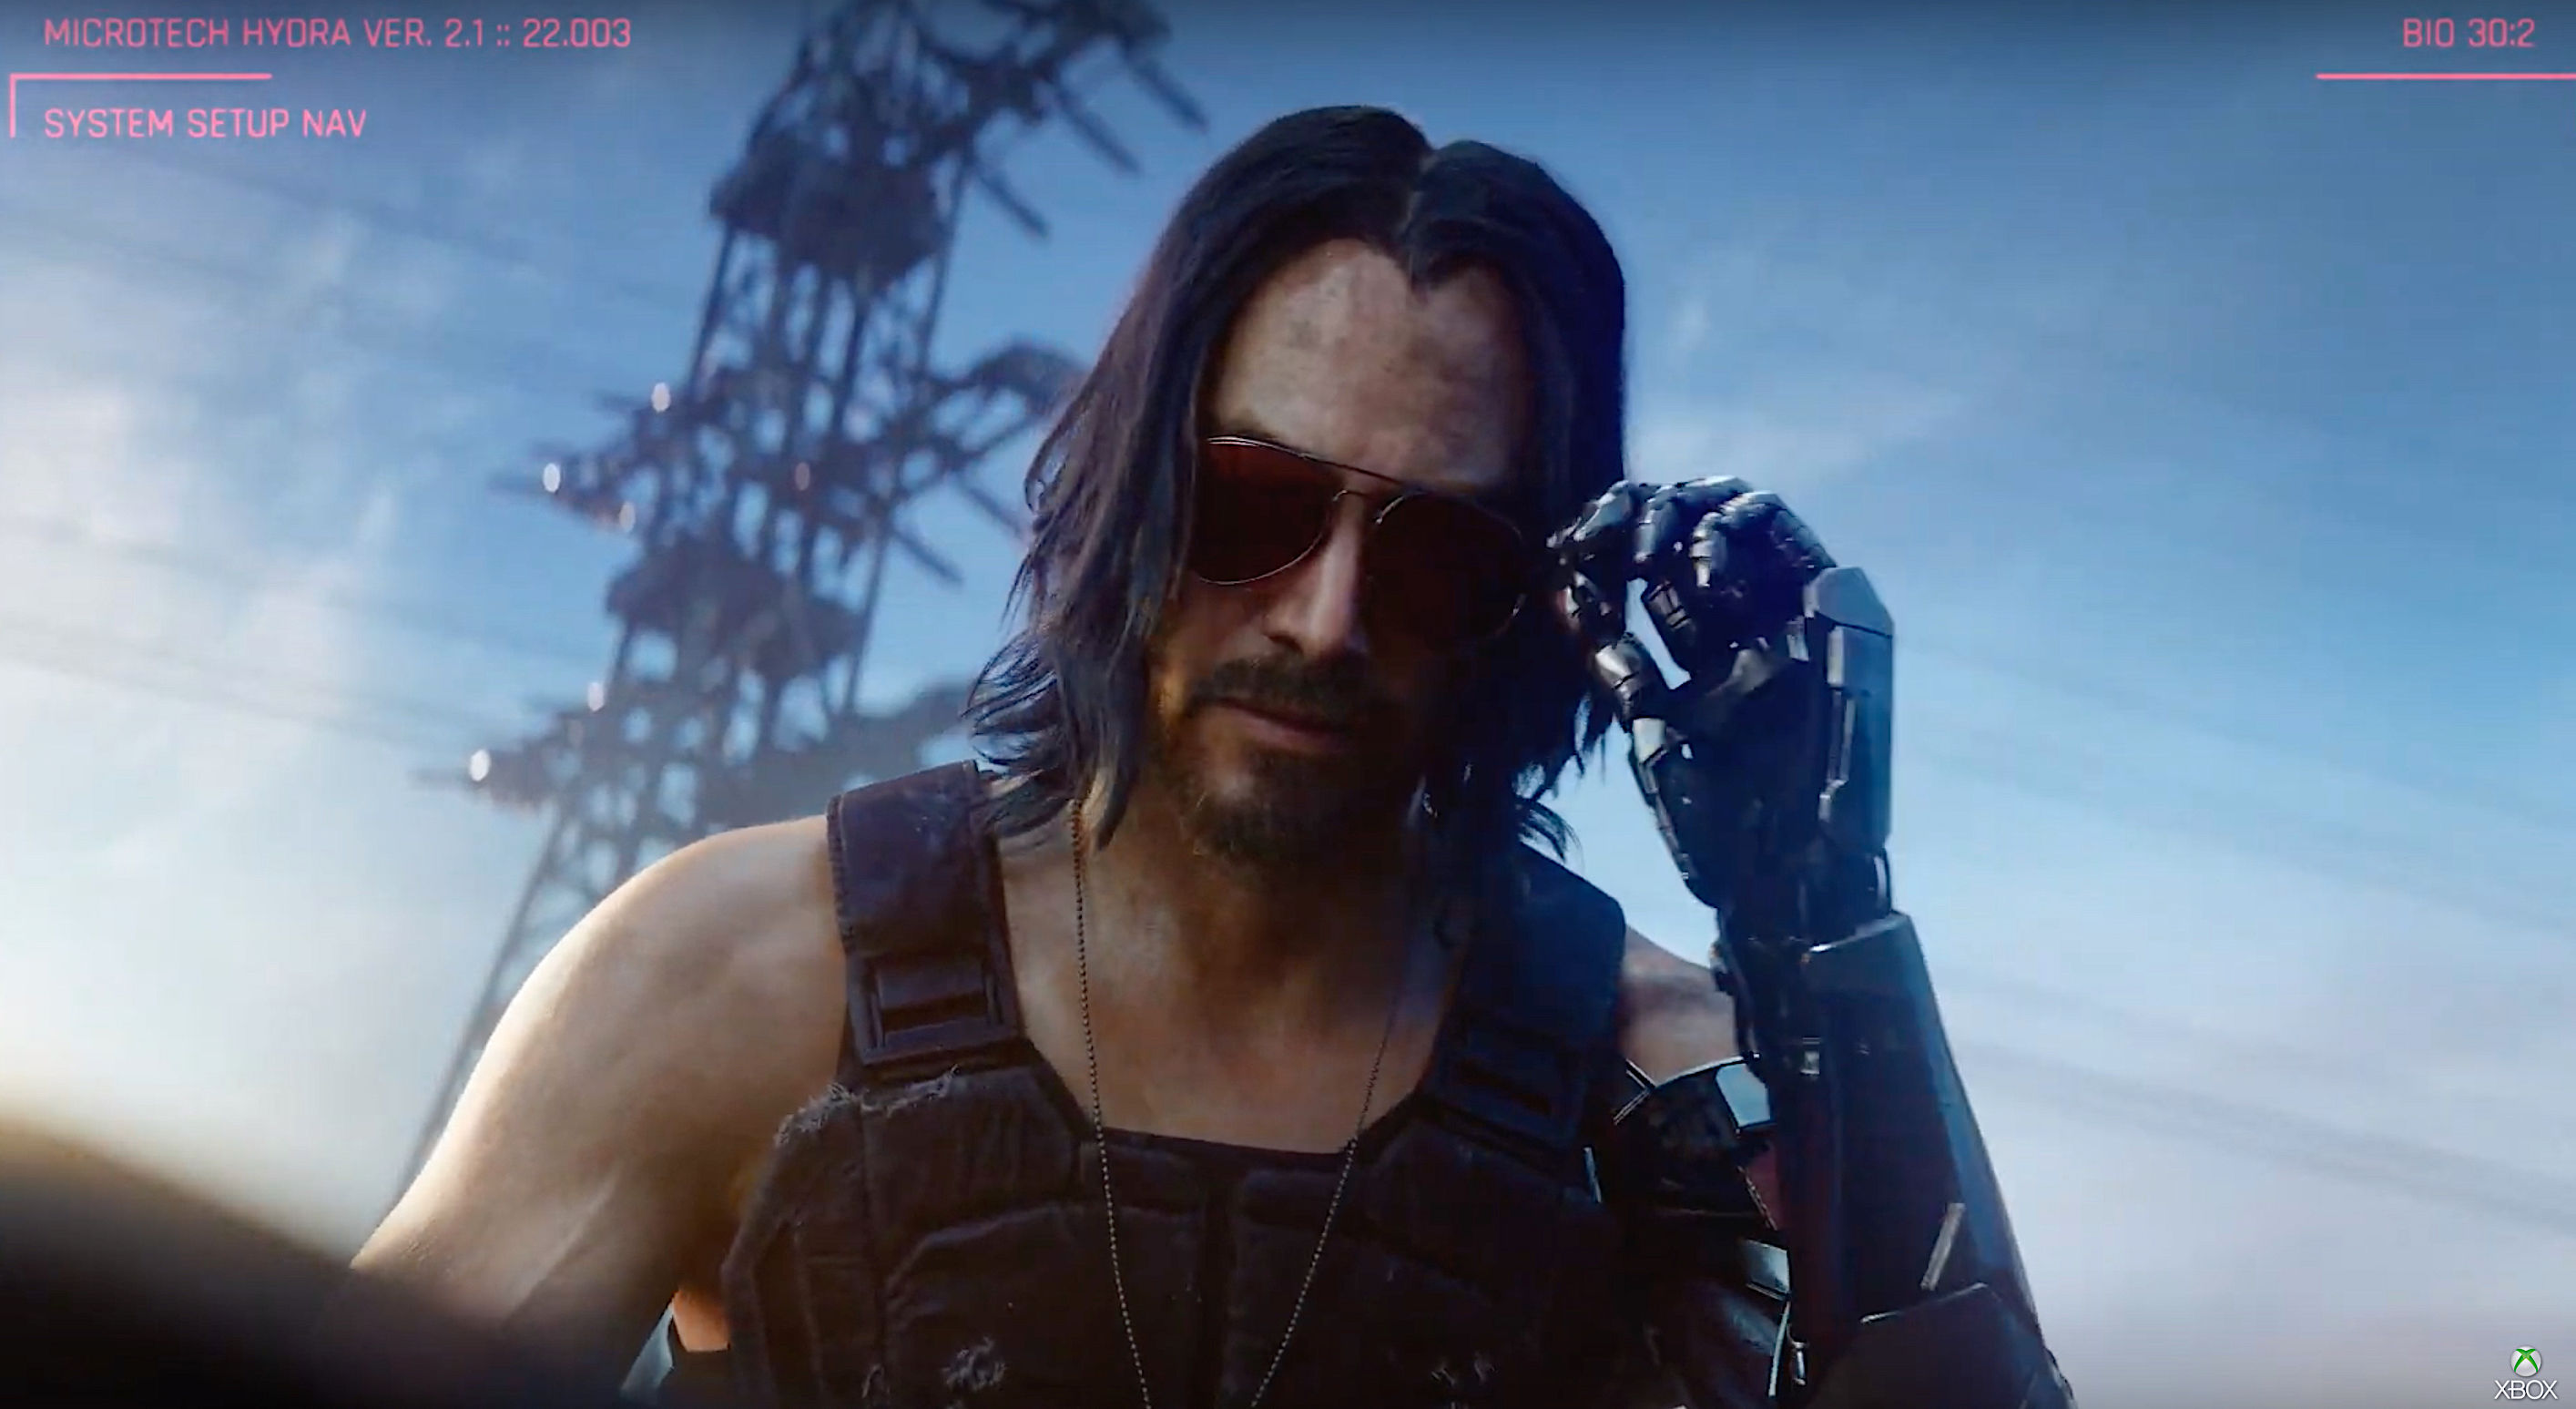 Keanu Reeves Cyberpunk 2077 trailer, Hyrule Warriors: Age of Calamity ...